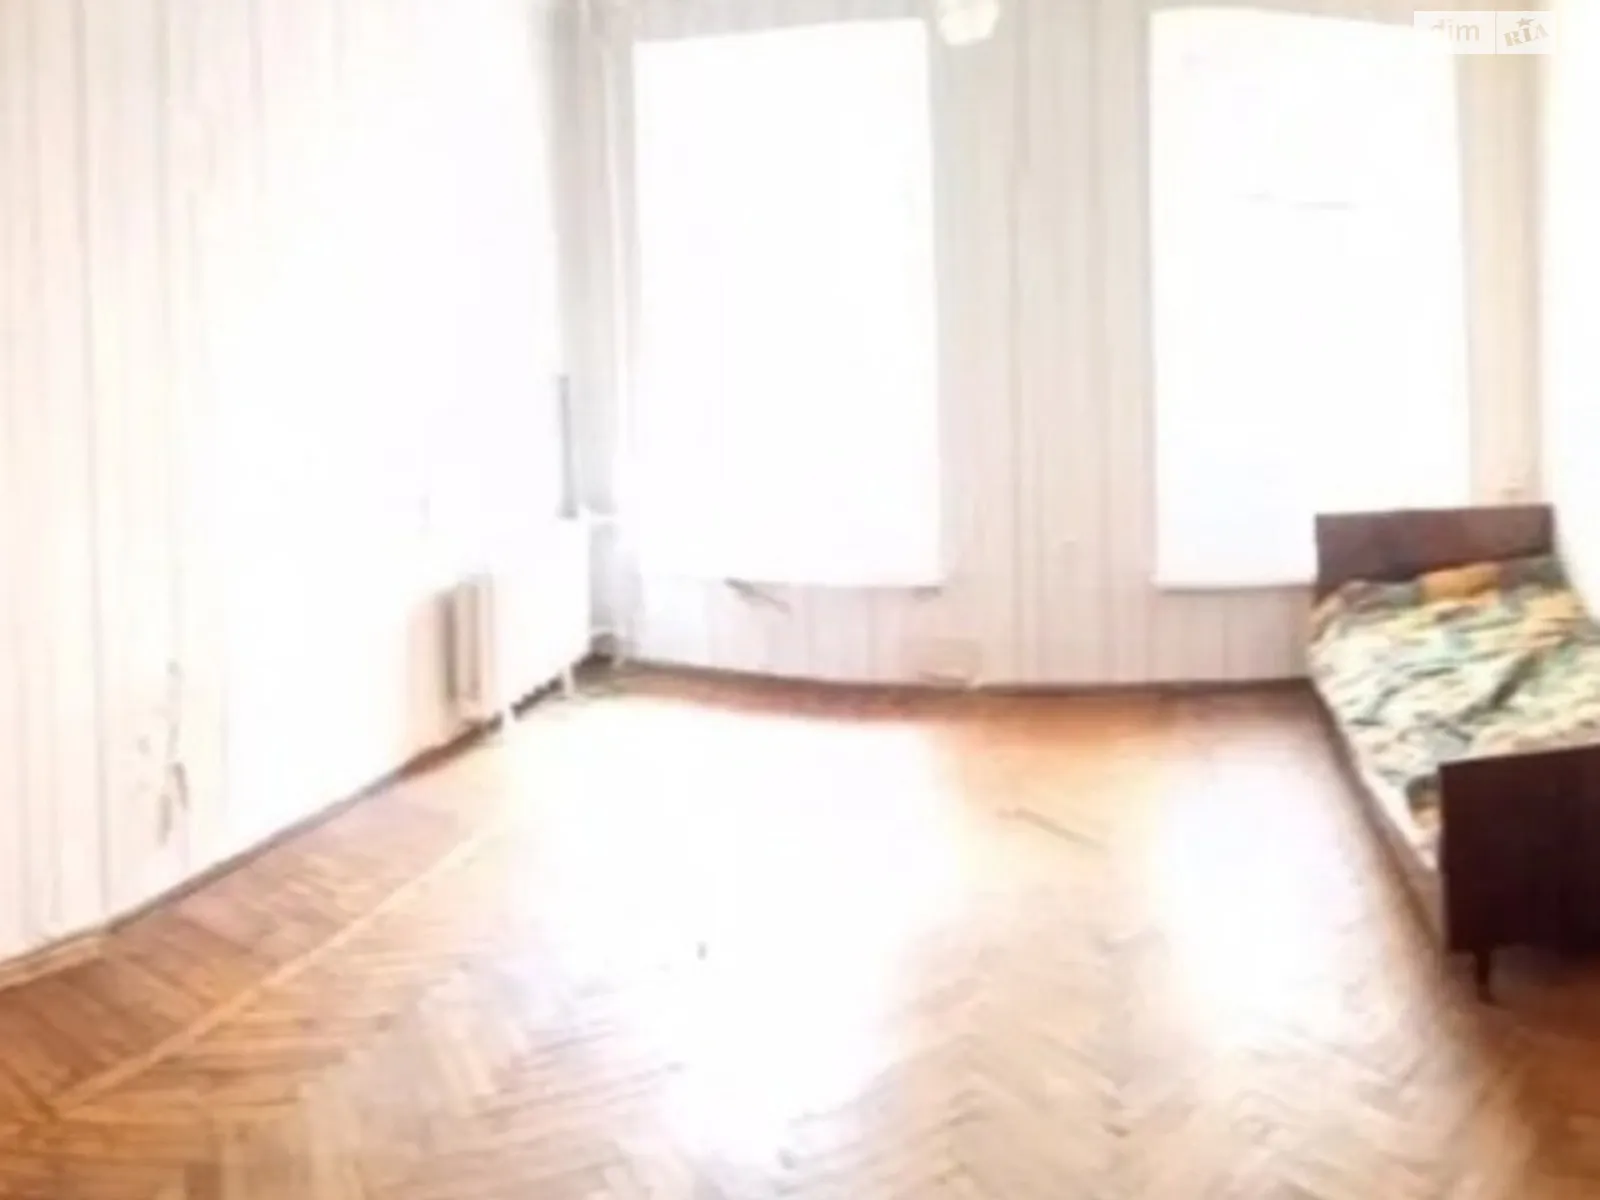 Продается комната 25 кв. м в Одессе, цена: 8500 $ - фото 1